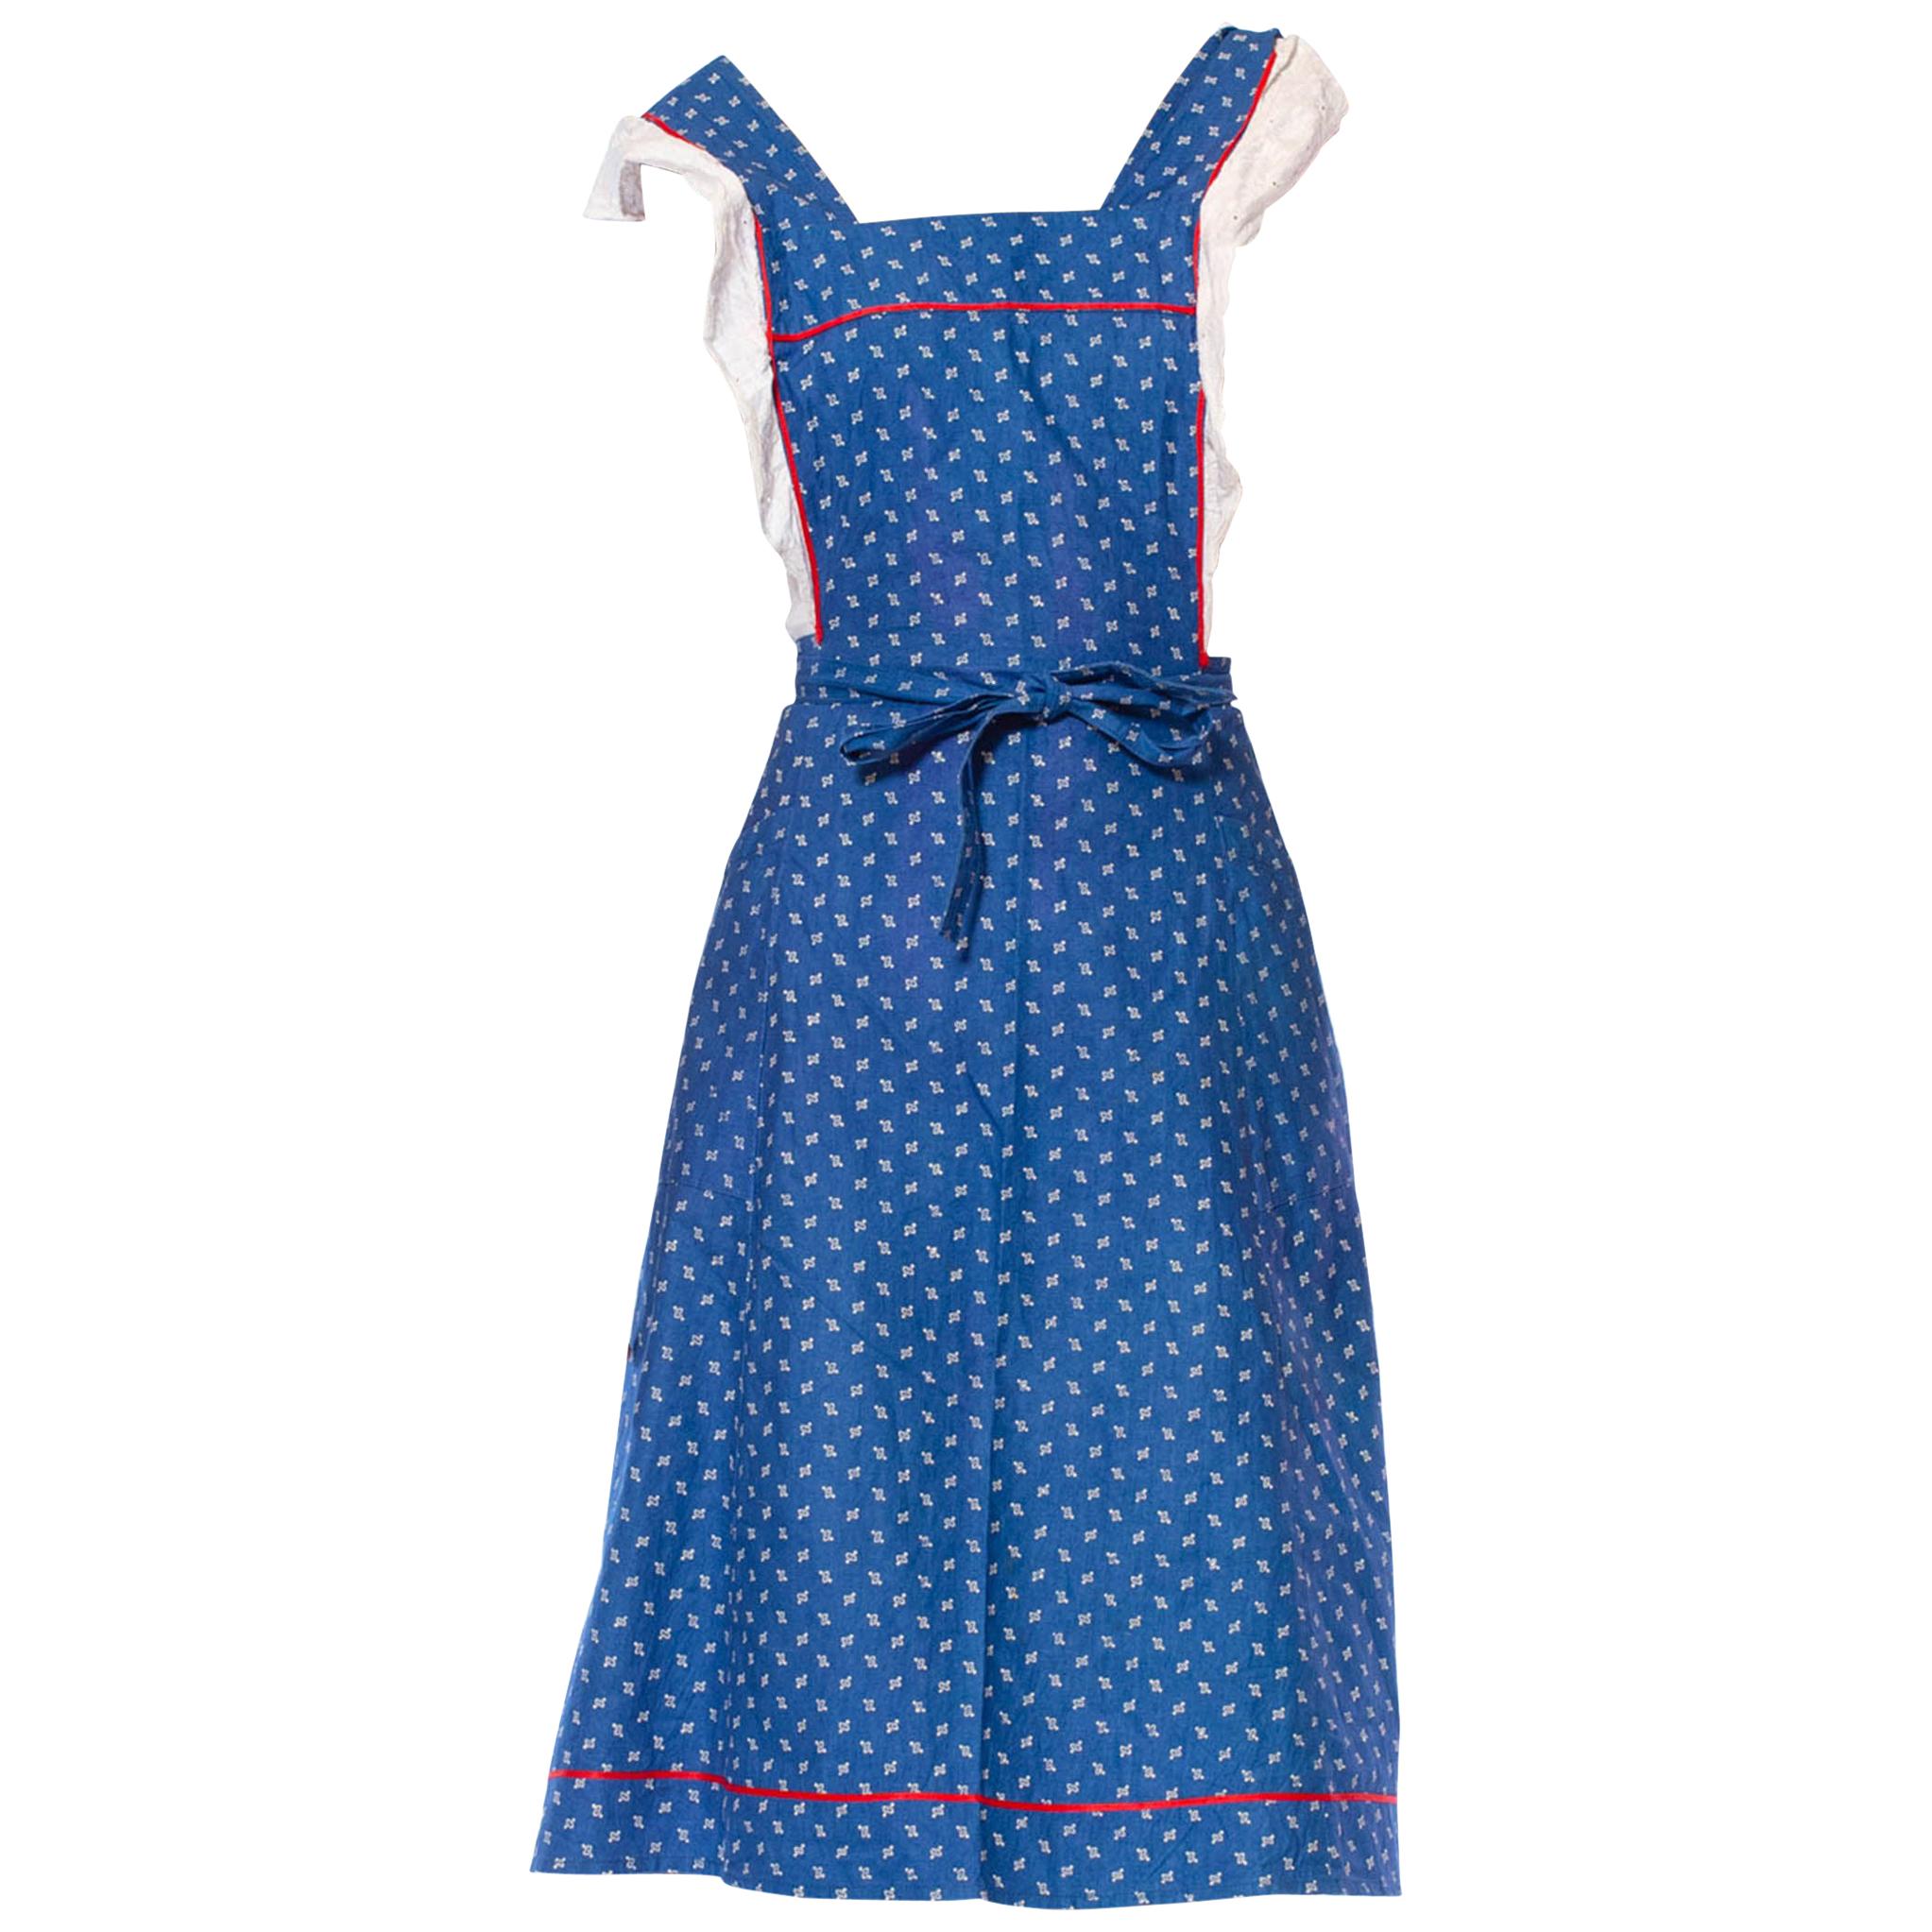 1970S Blue & White Cotton Scandinavian Pinafore Apron Dress